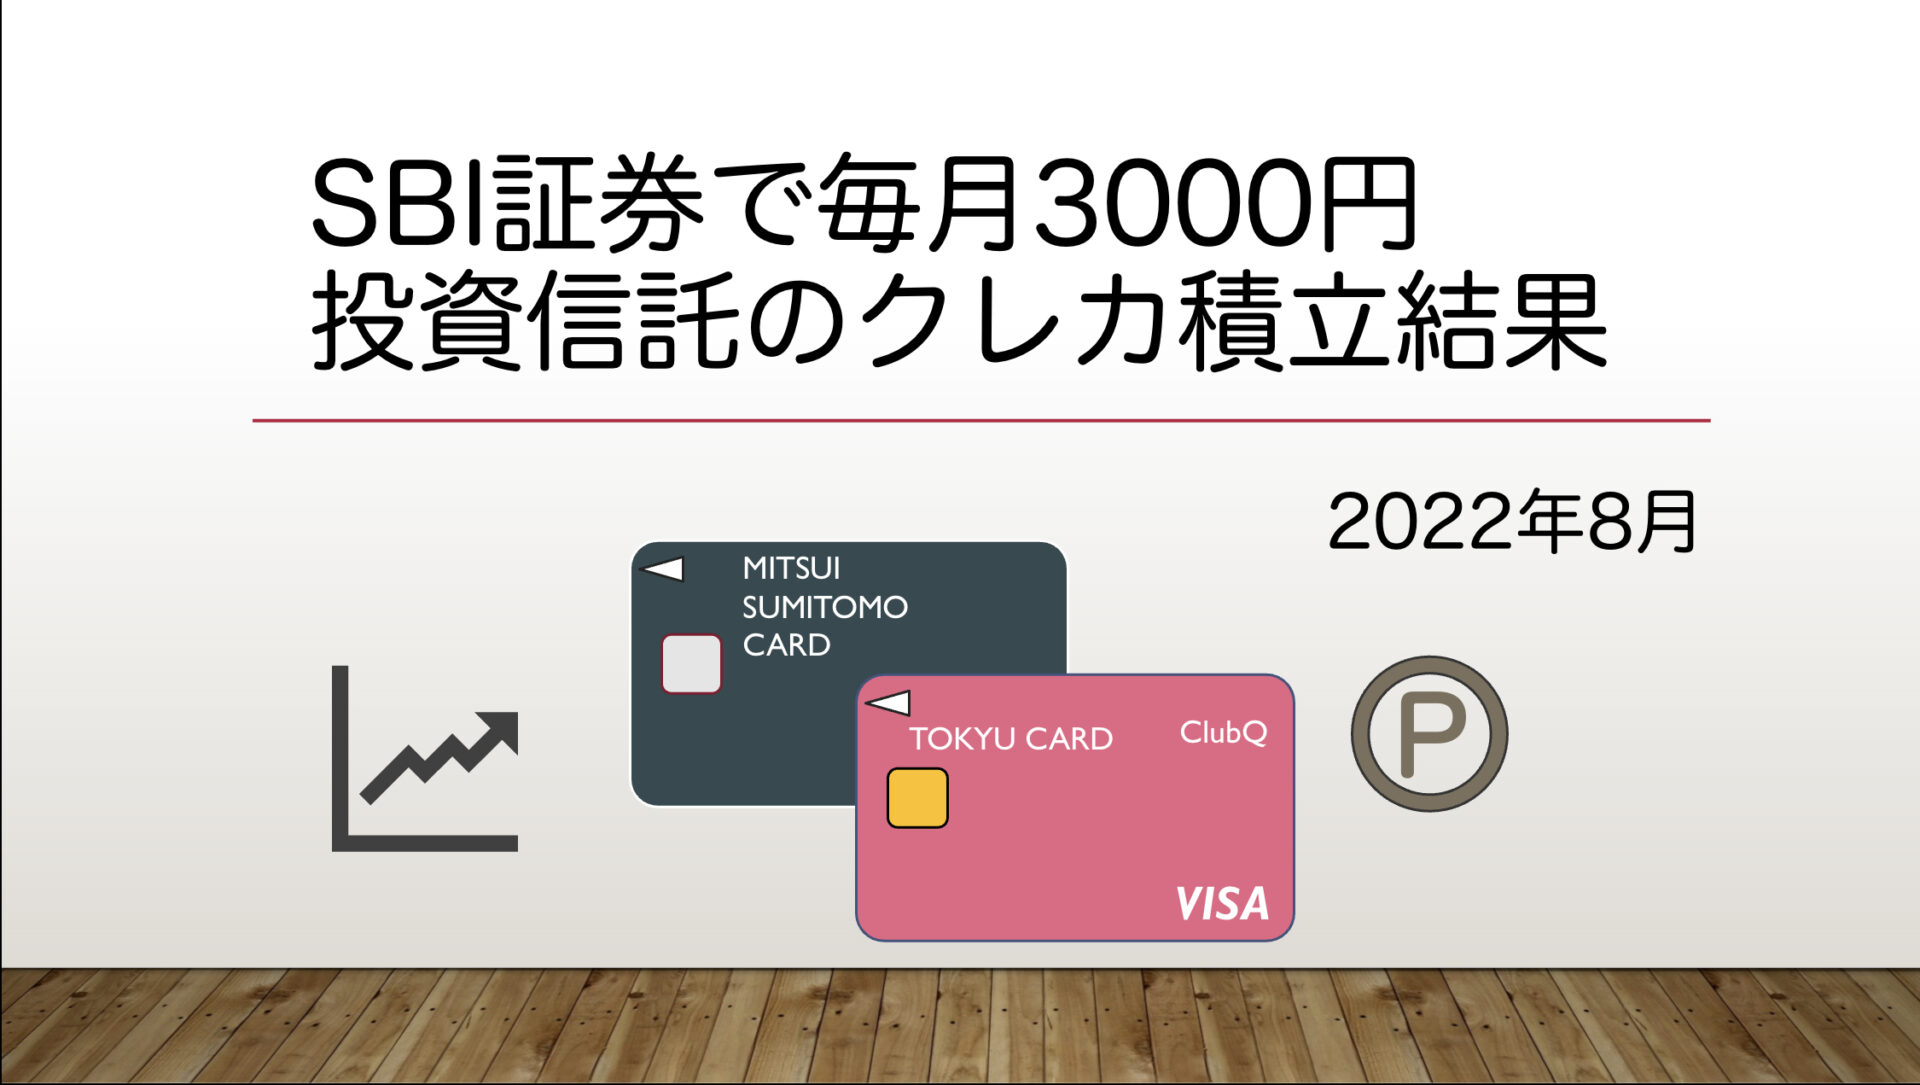 【SBI証券】三井住友カードによる投資信託のクレカ積立結果【2022年8月】